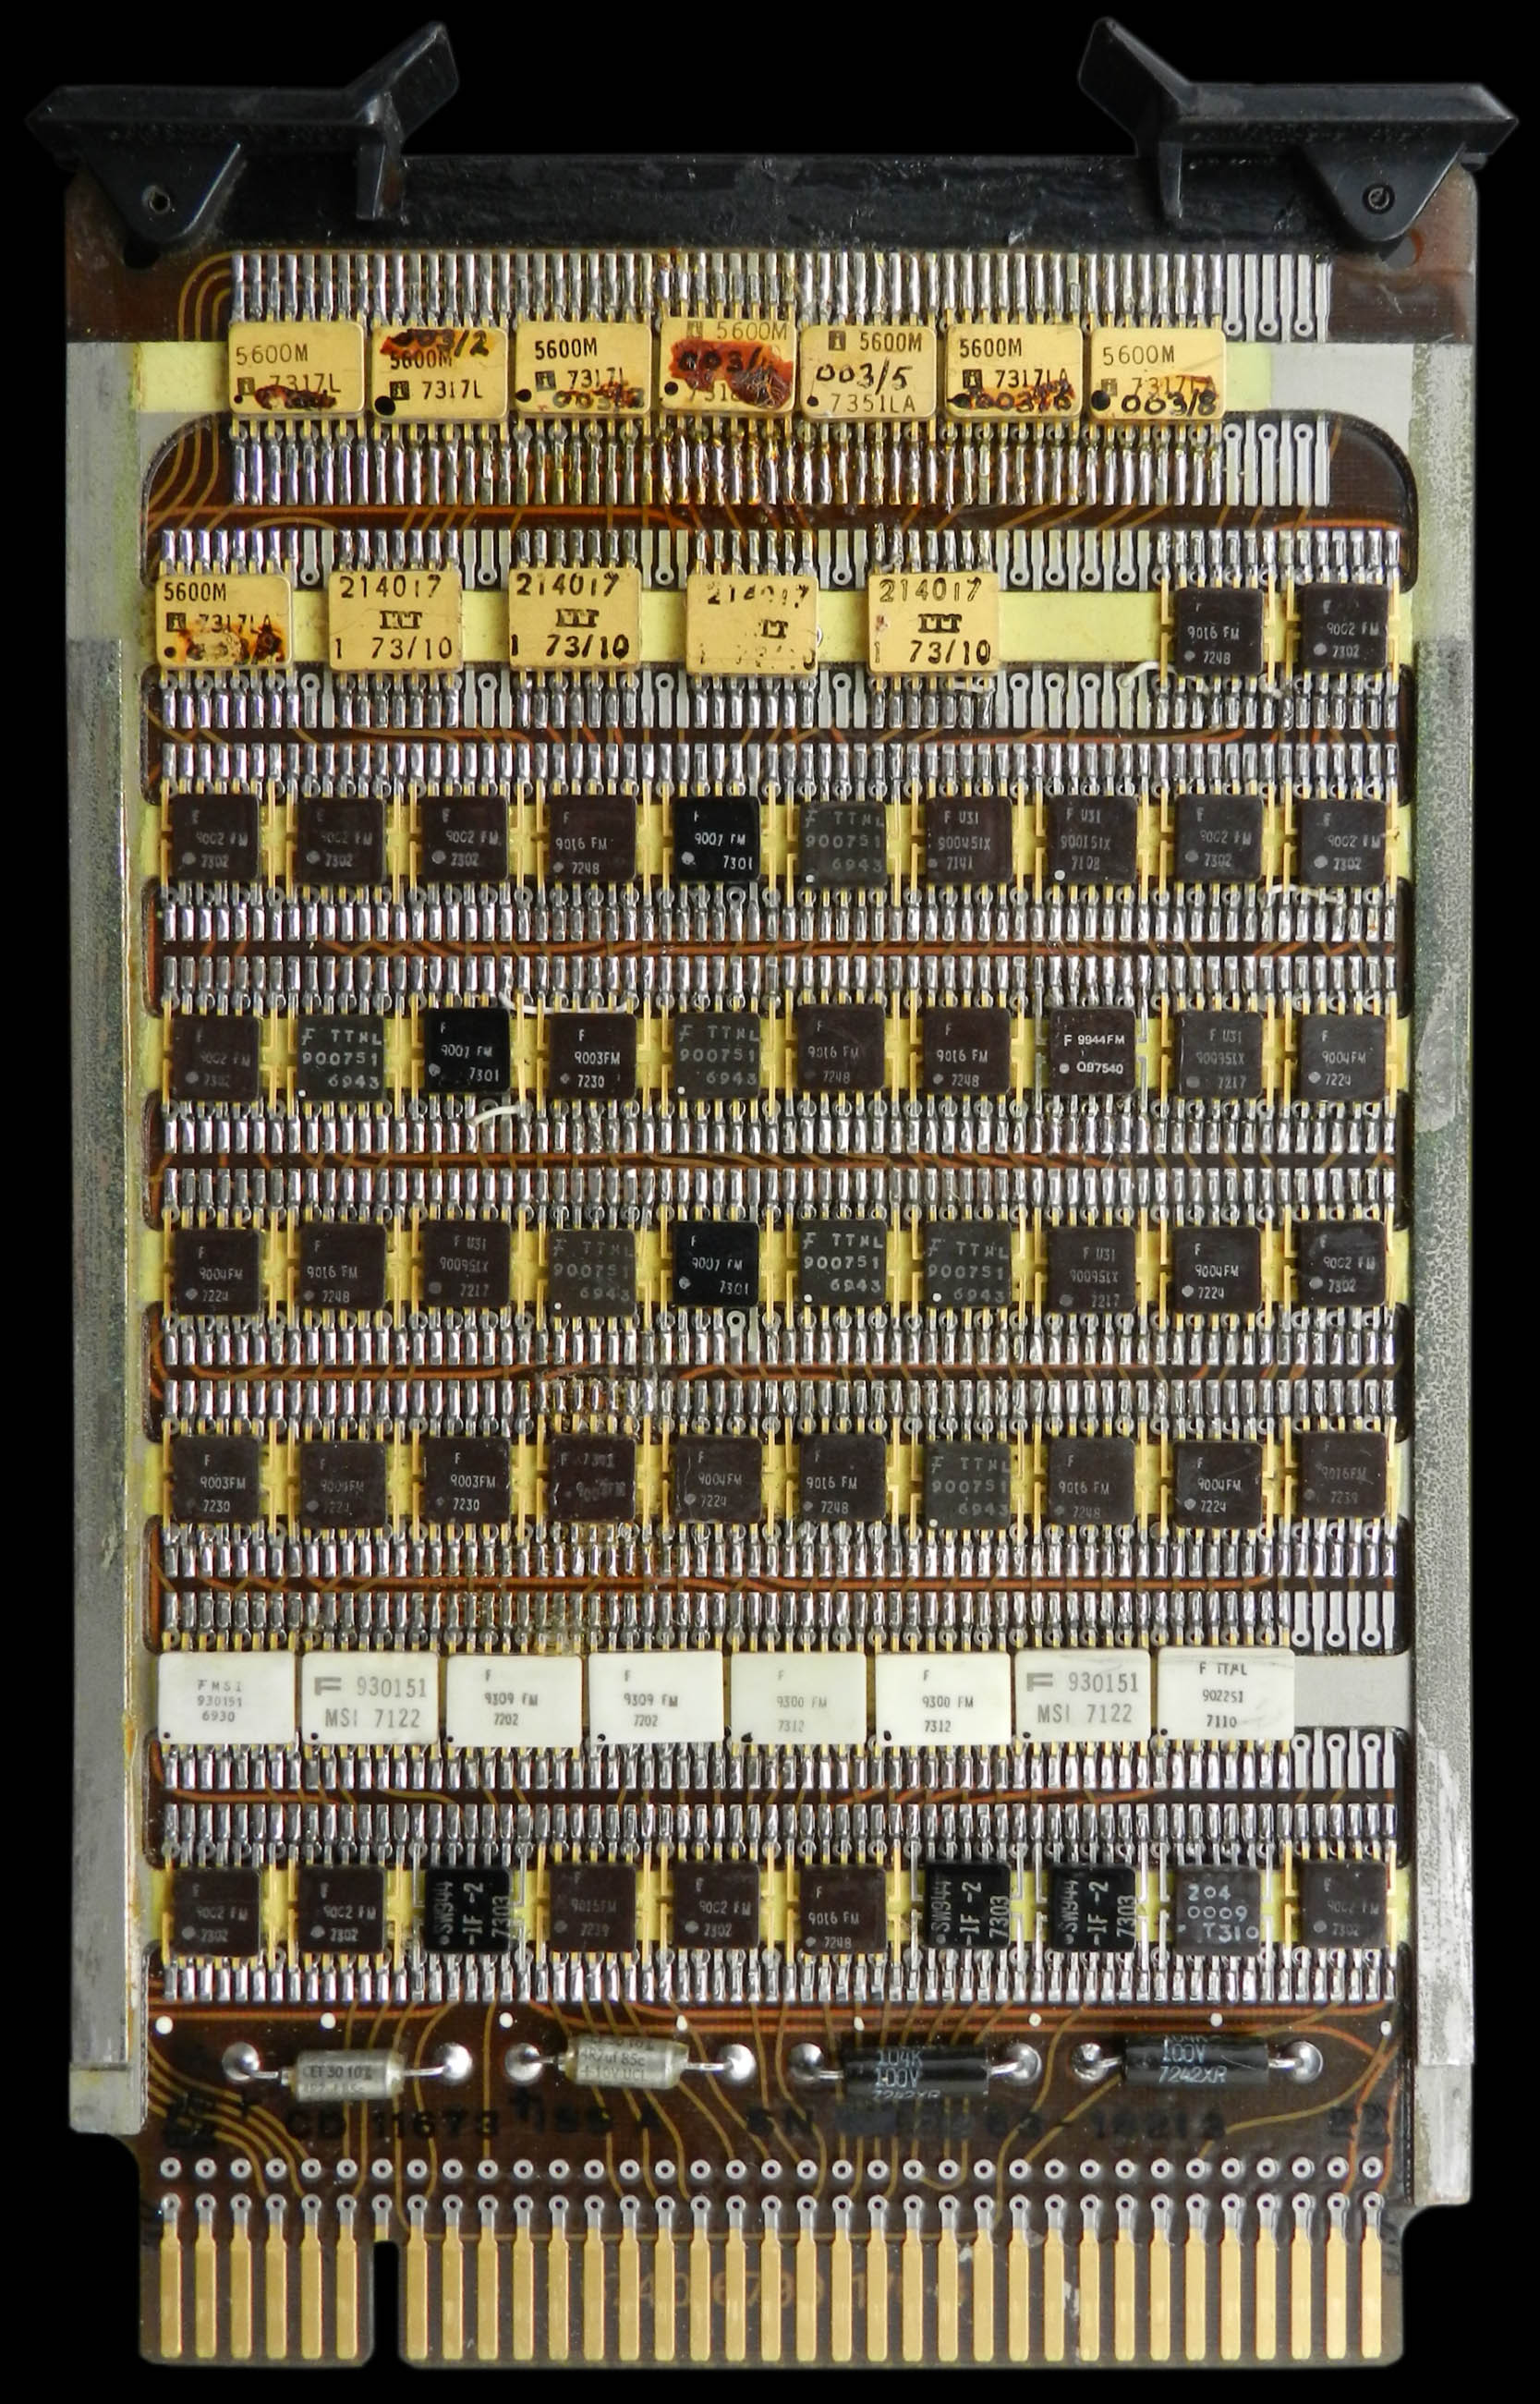 NCS1 Waveform Generator Circuit Board